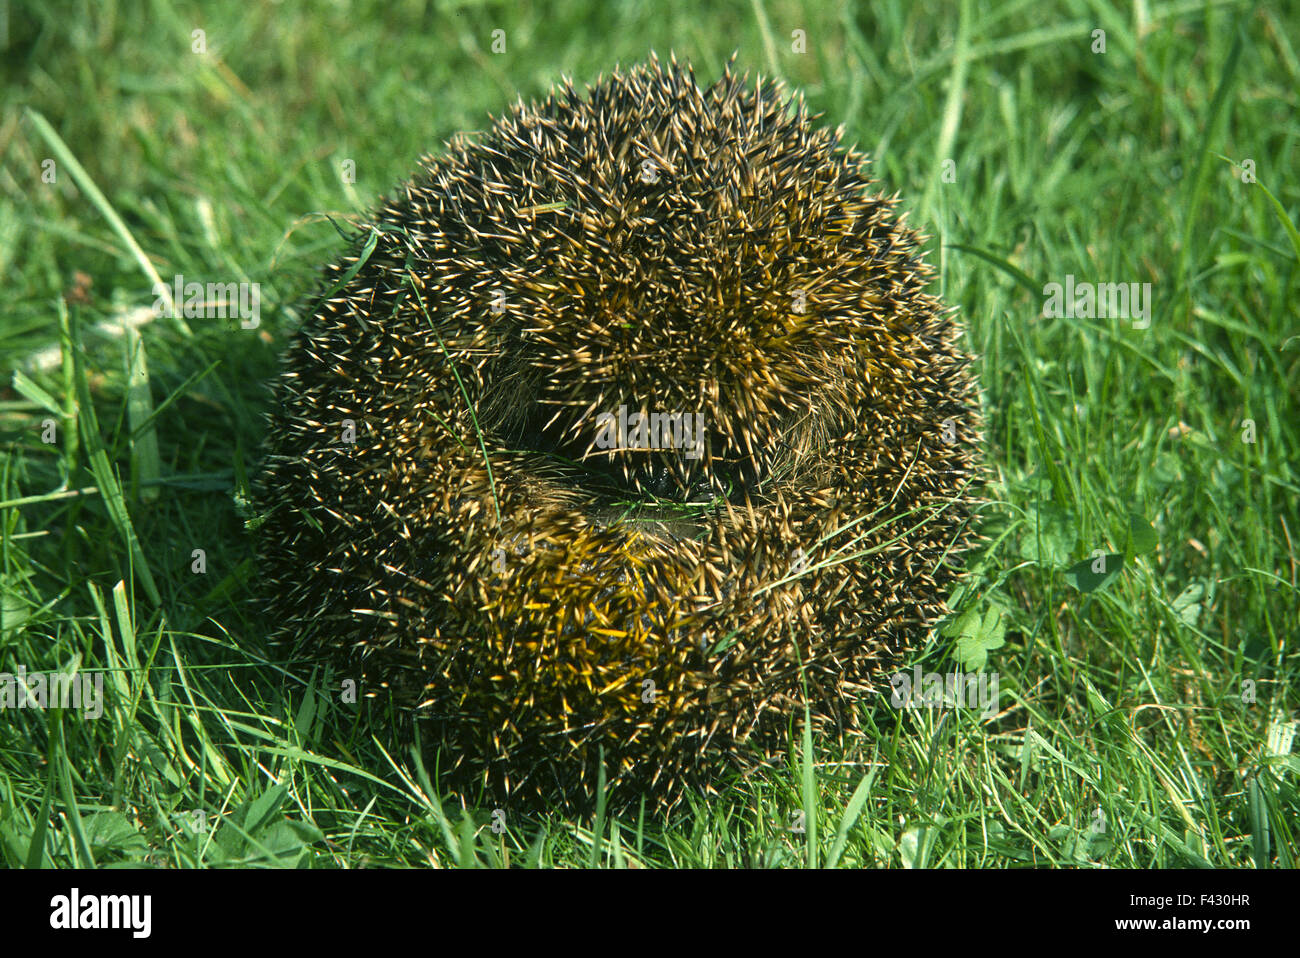 hedgehog curled Stock Photo